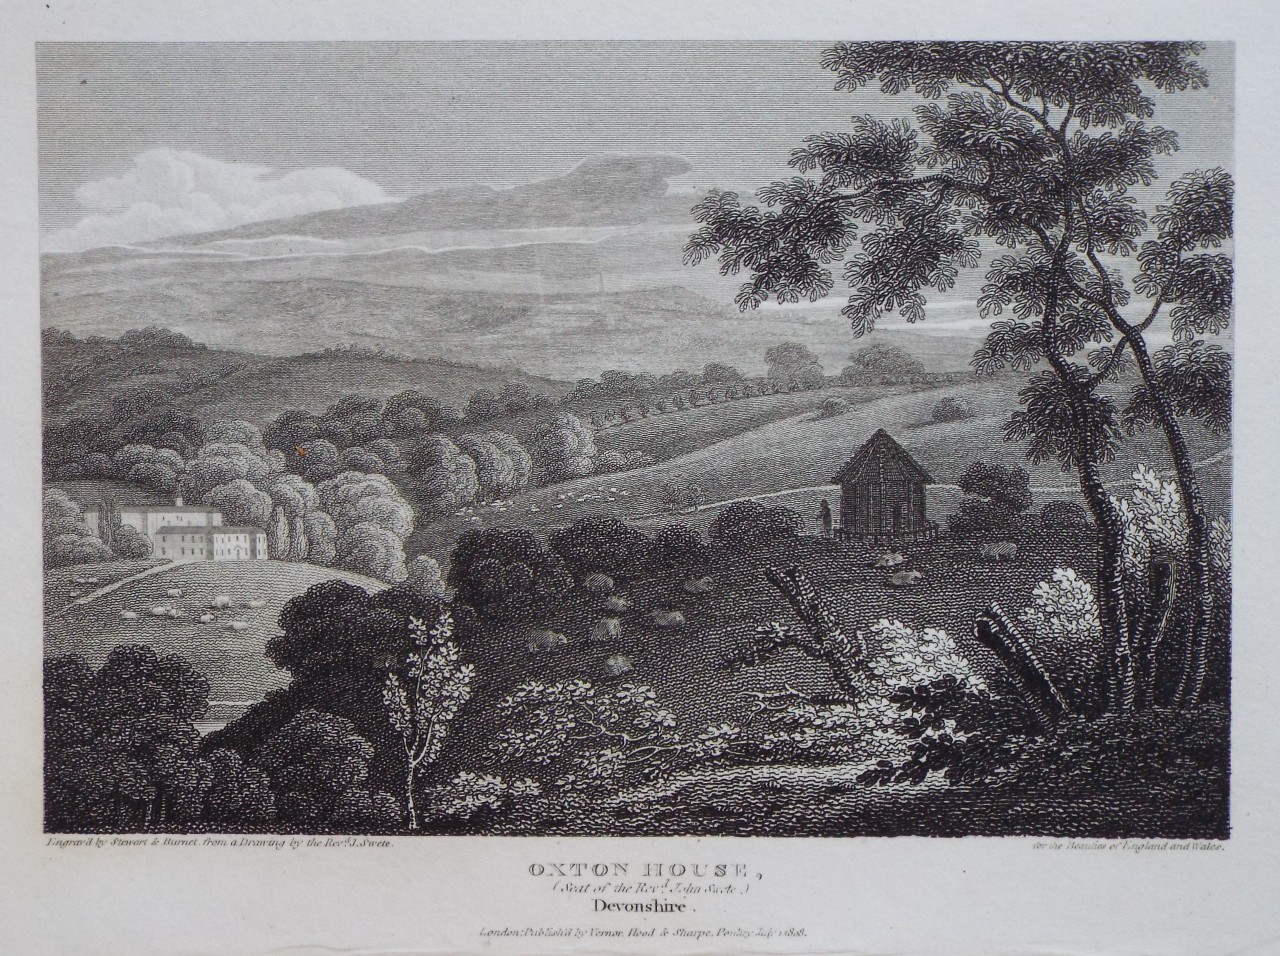 Print - Oxton House, (Seat of the Revd. John Swete.) Devonshire - Stewart